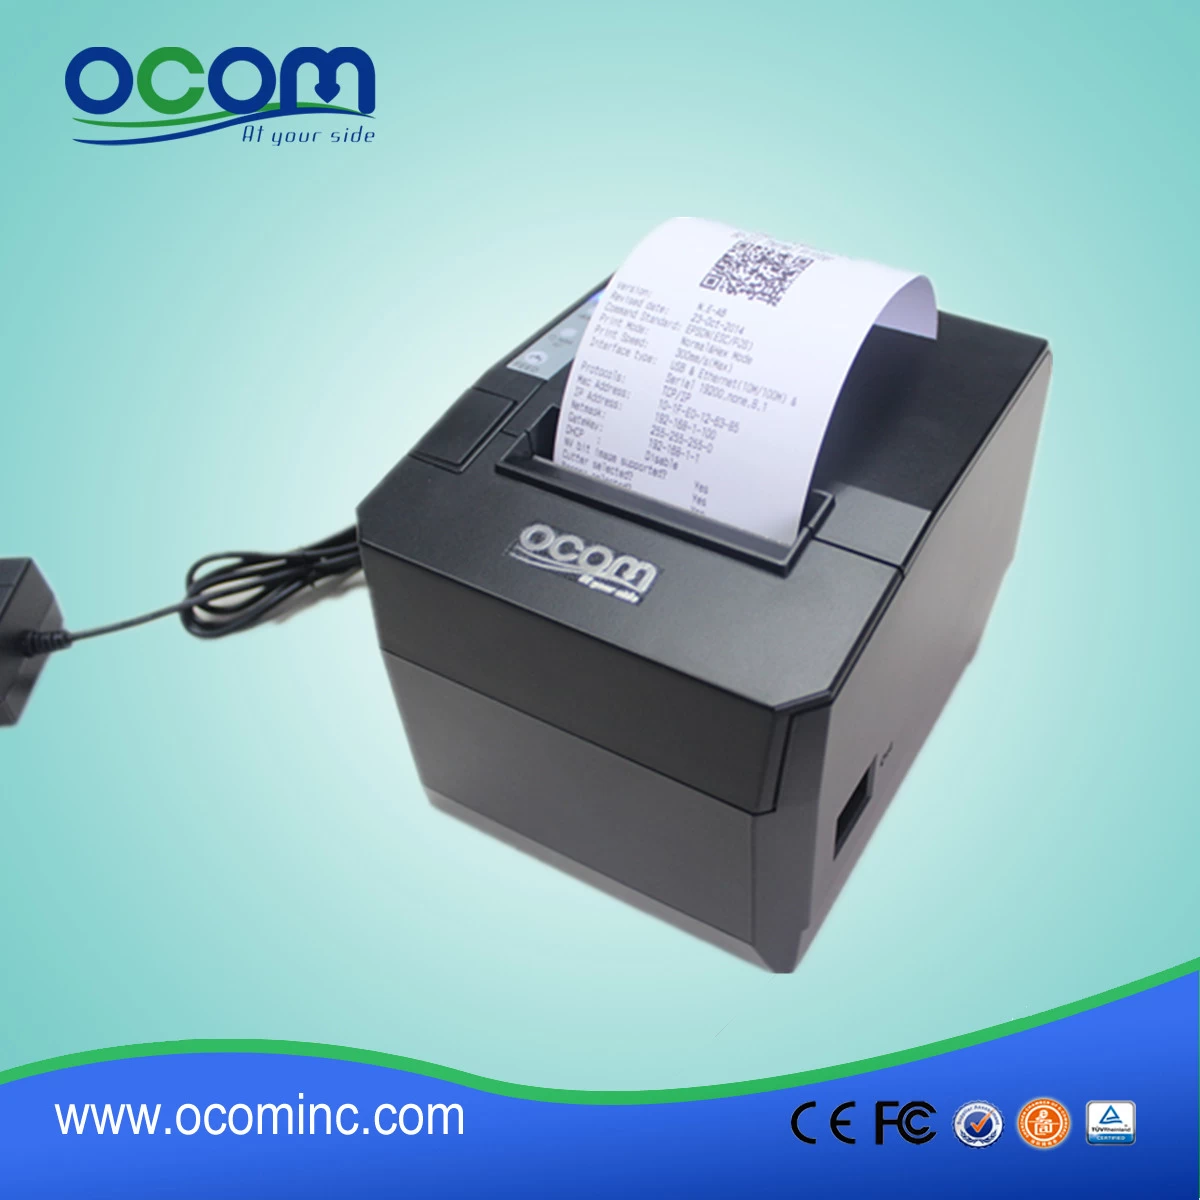 Re: 2015 newest 80mm bluetooth thermal receipt printer-OCPP-88A-BUL